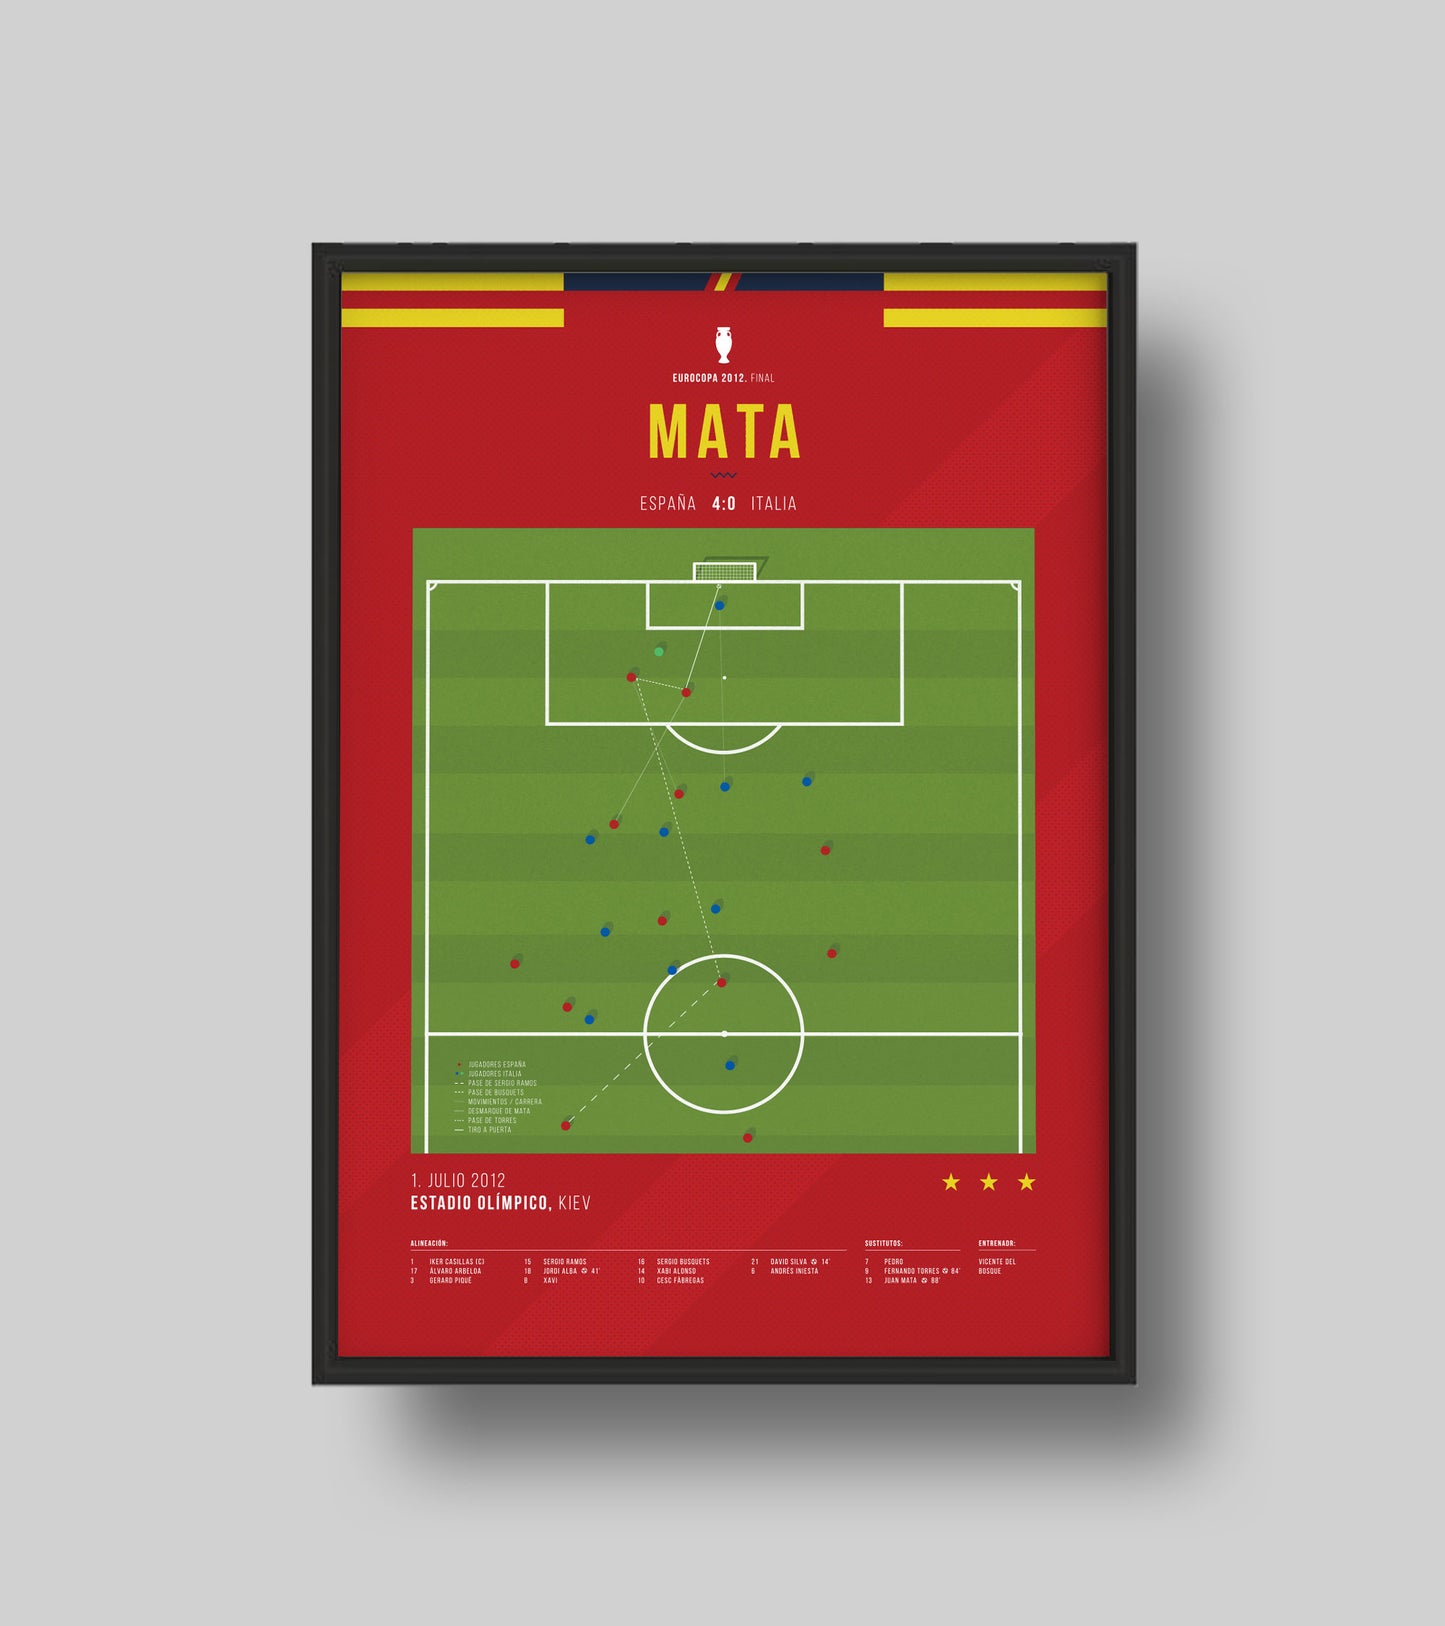 Mata's goal to close a historic win